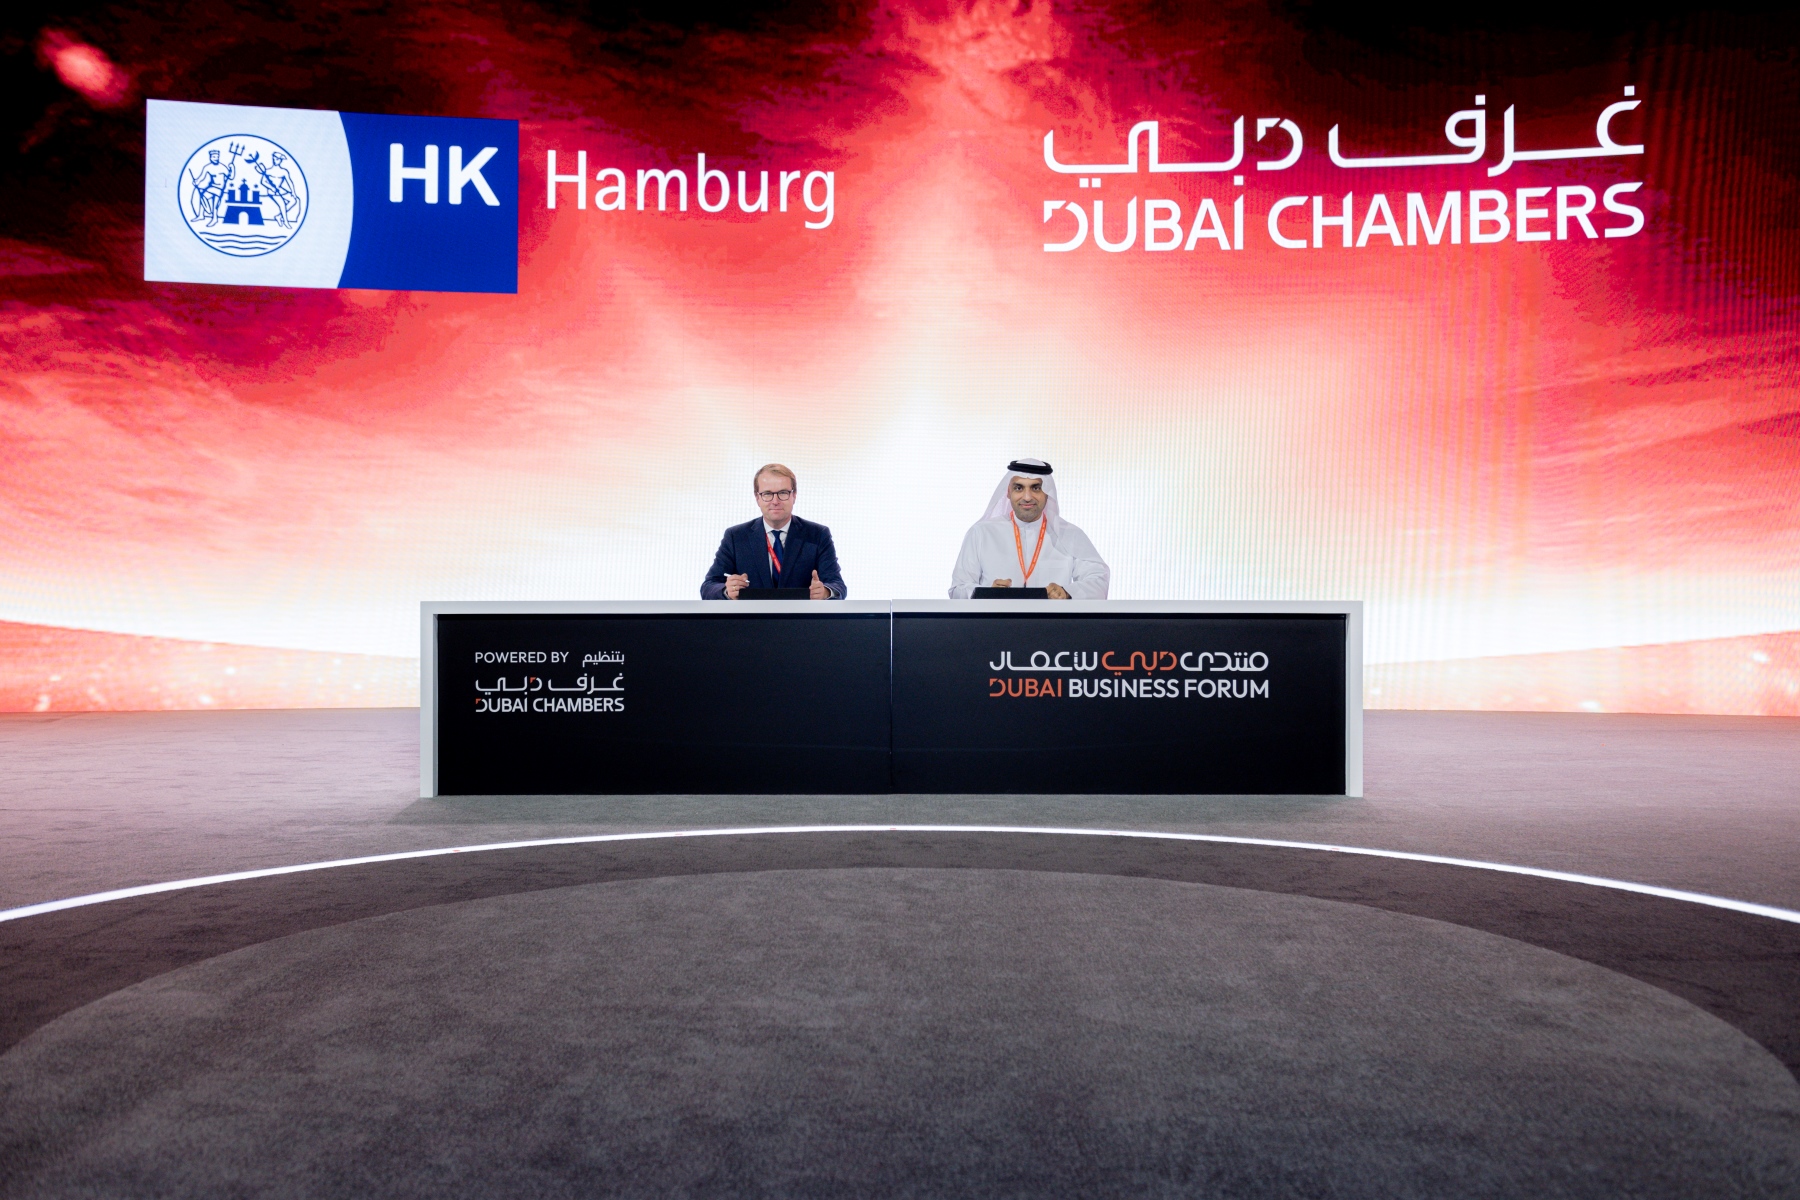 Dubai Chambers and Hamburg Chamber of Commerce sign agreement to establish new ‘Innovation Corridor’